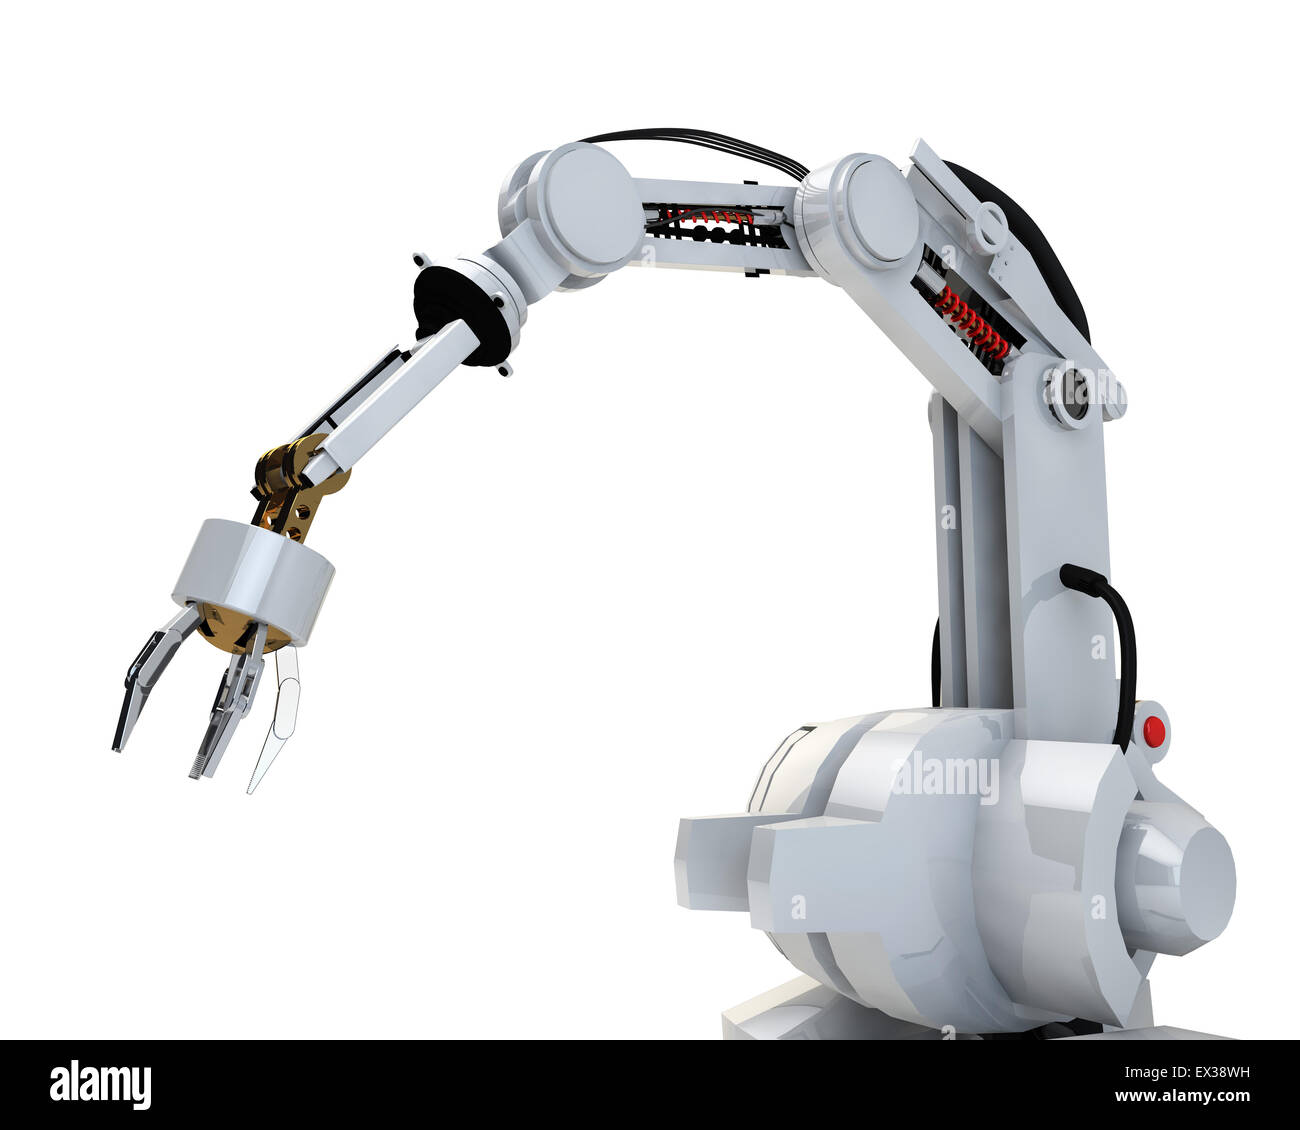 Bras de robot CG Photo Stock - Alamy